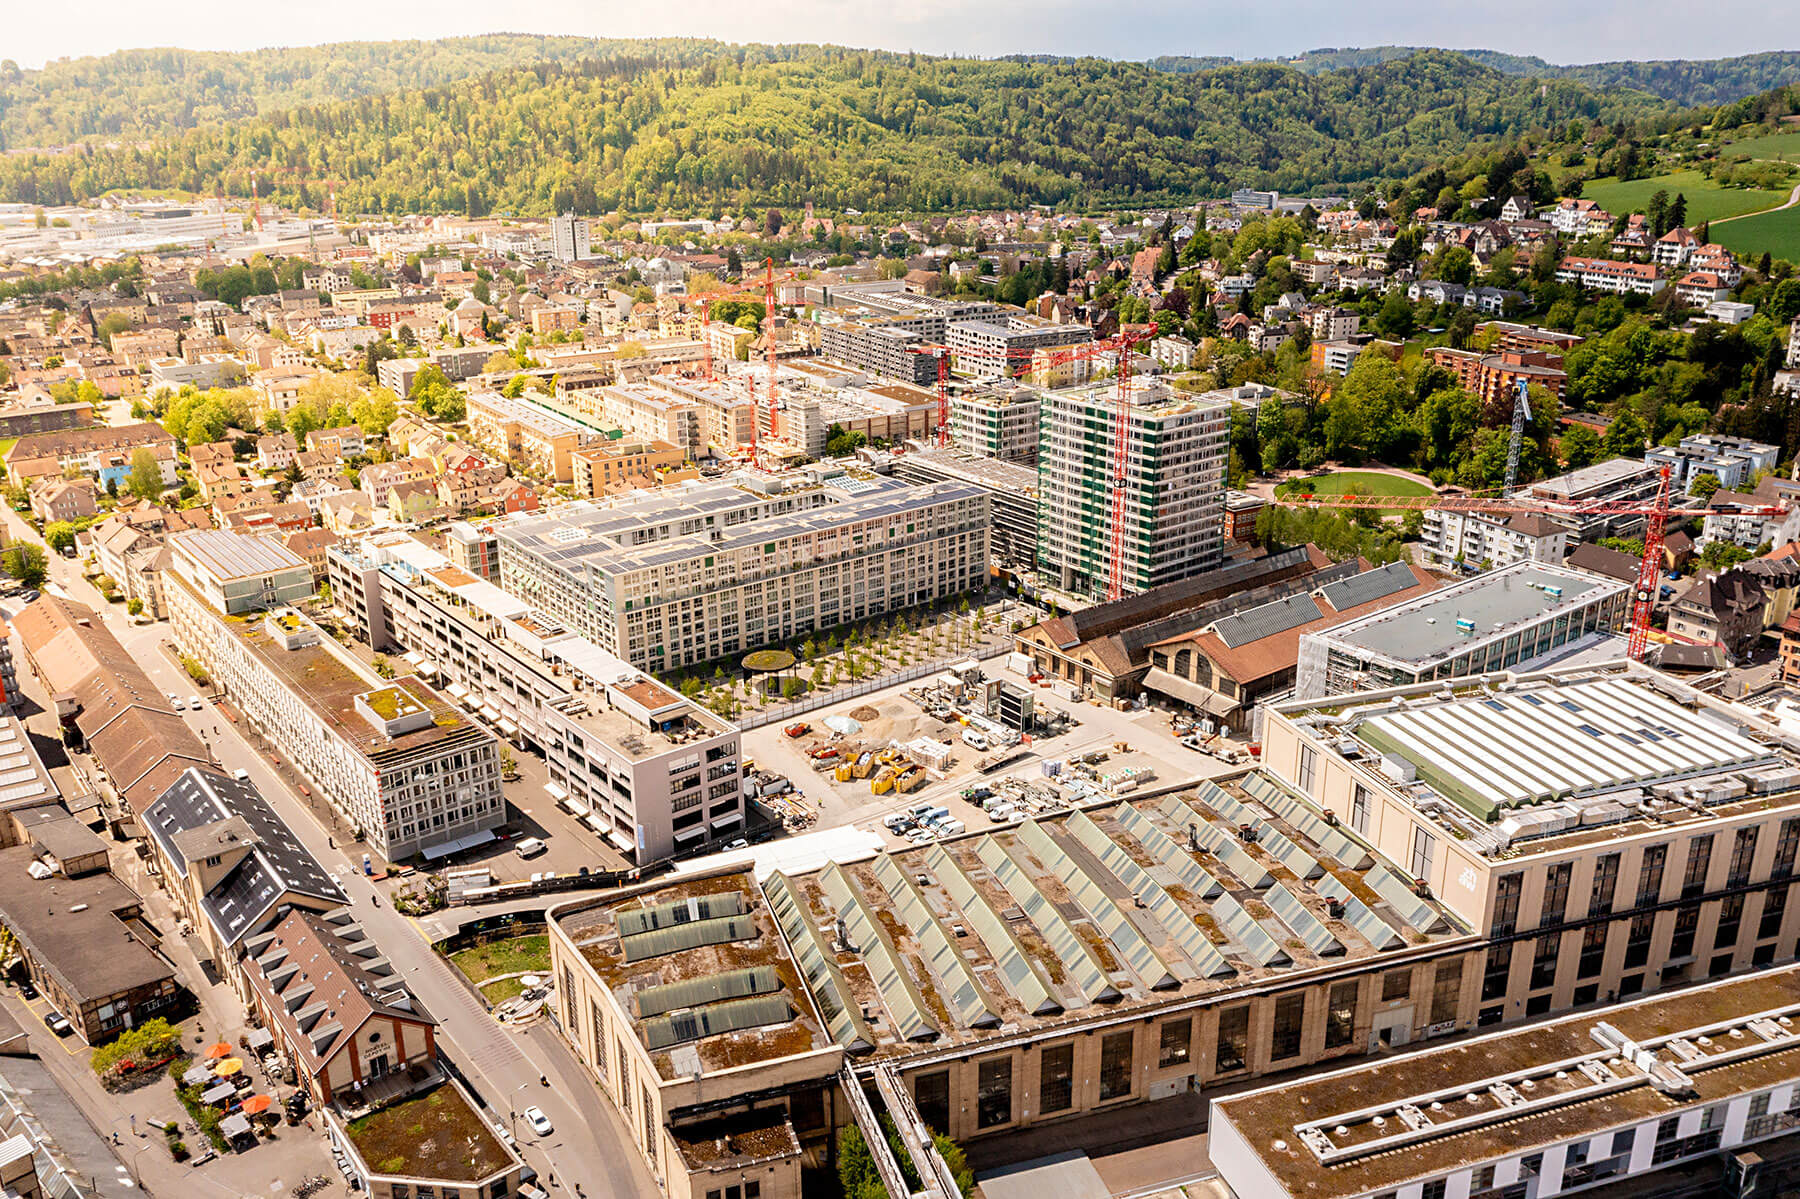 Lokstadt Winterthur from the air